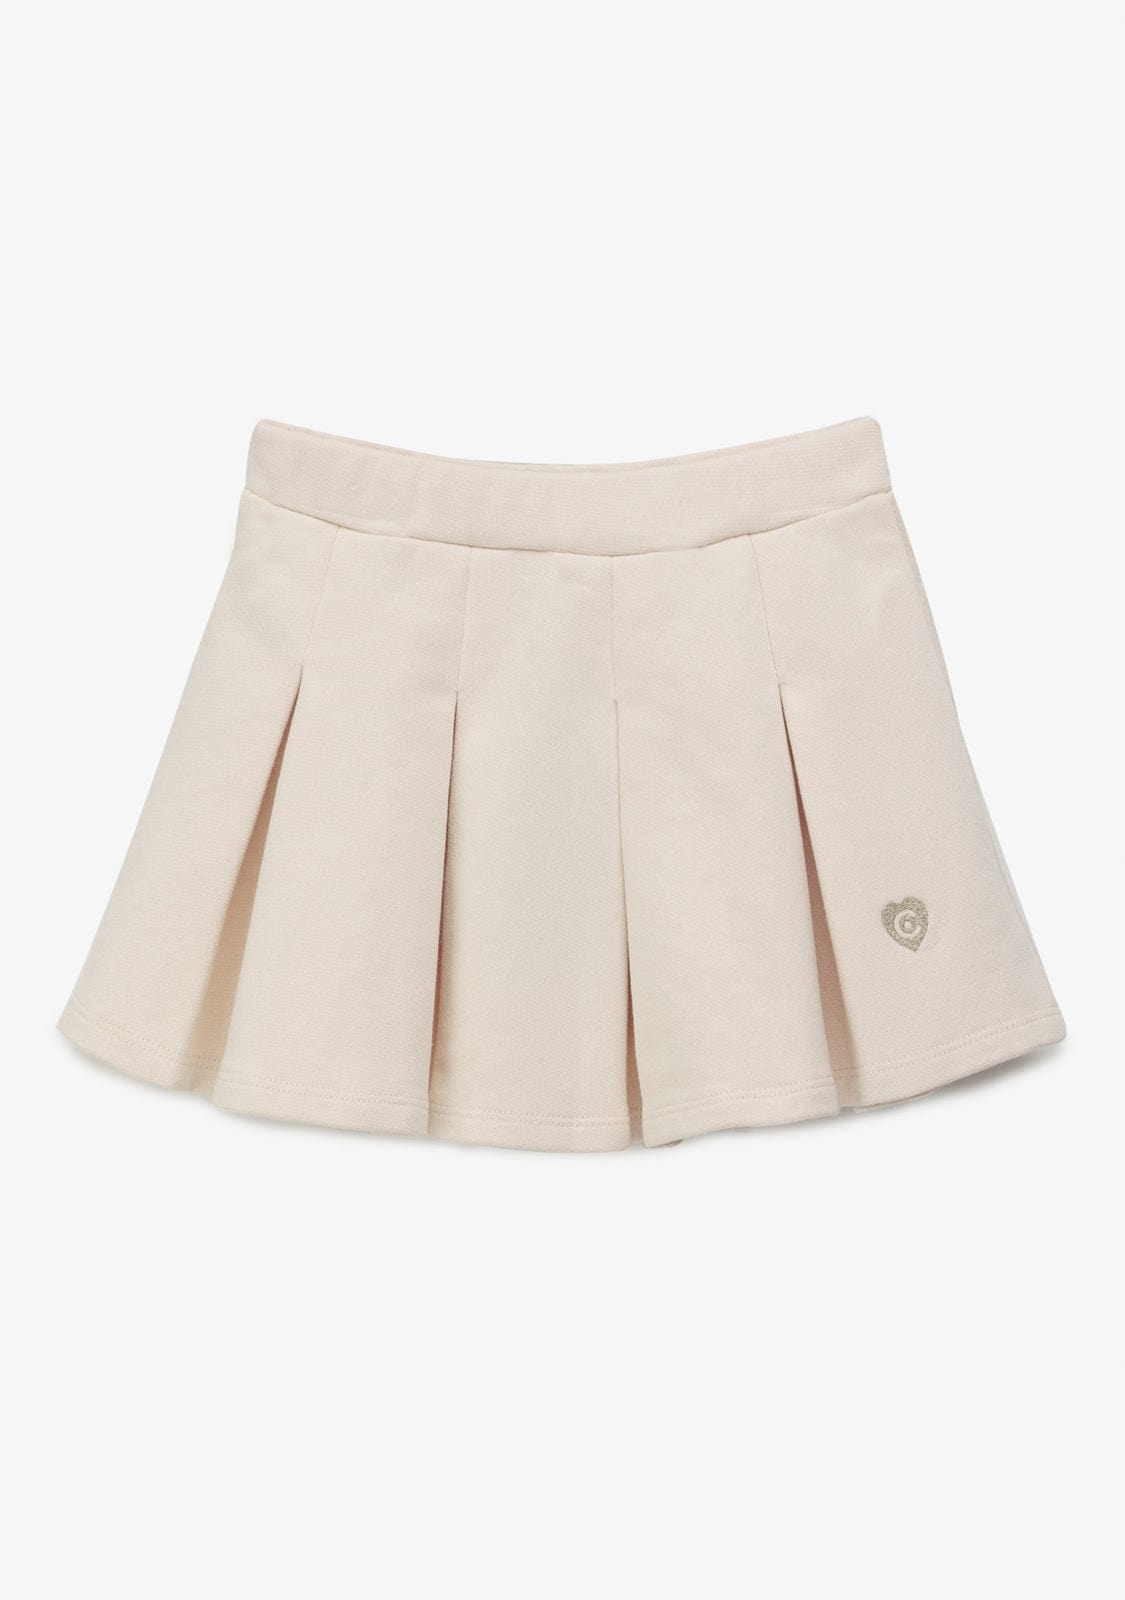 CONGUITOS TEXTIL Clothing Girl's Beige Basic Skirt